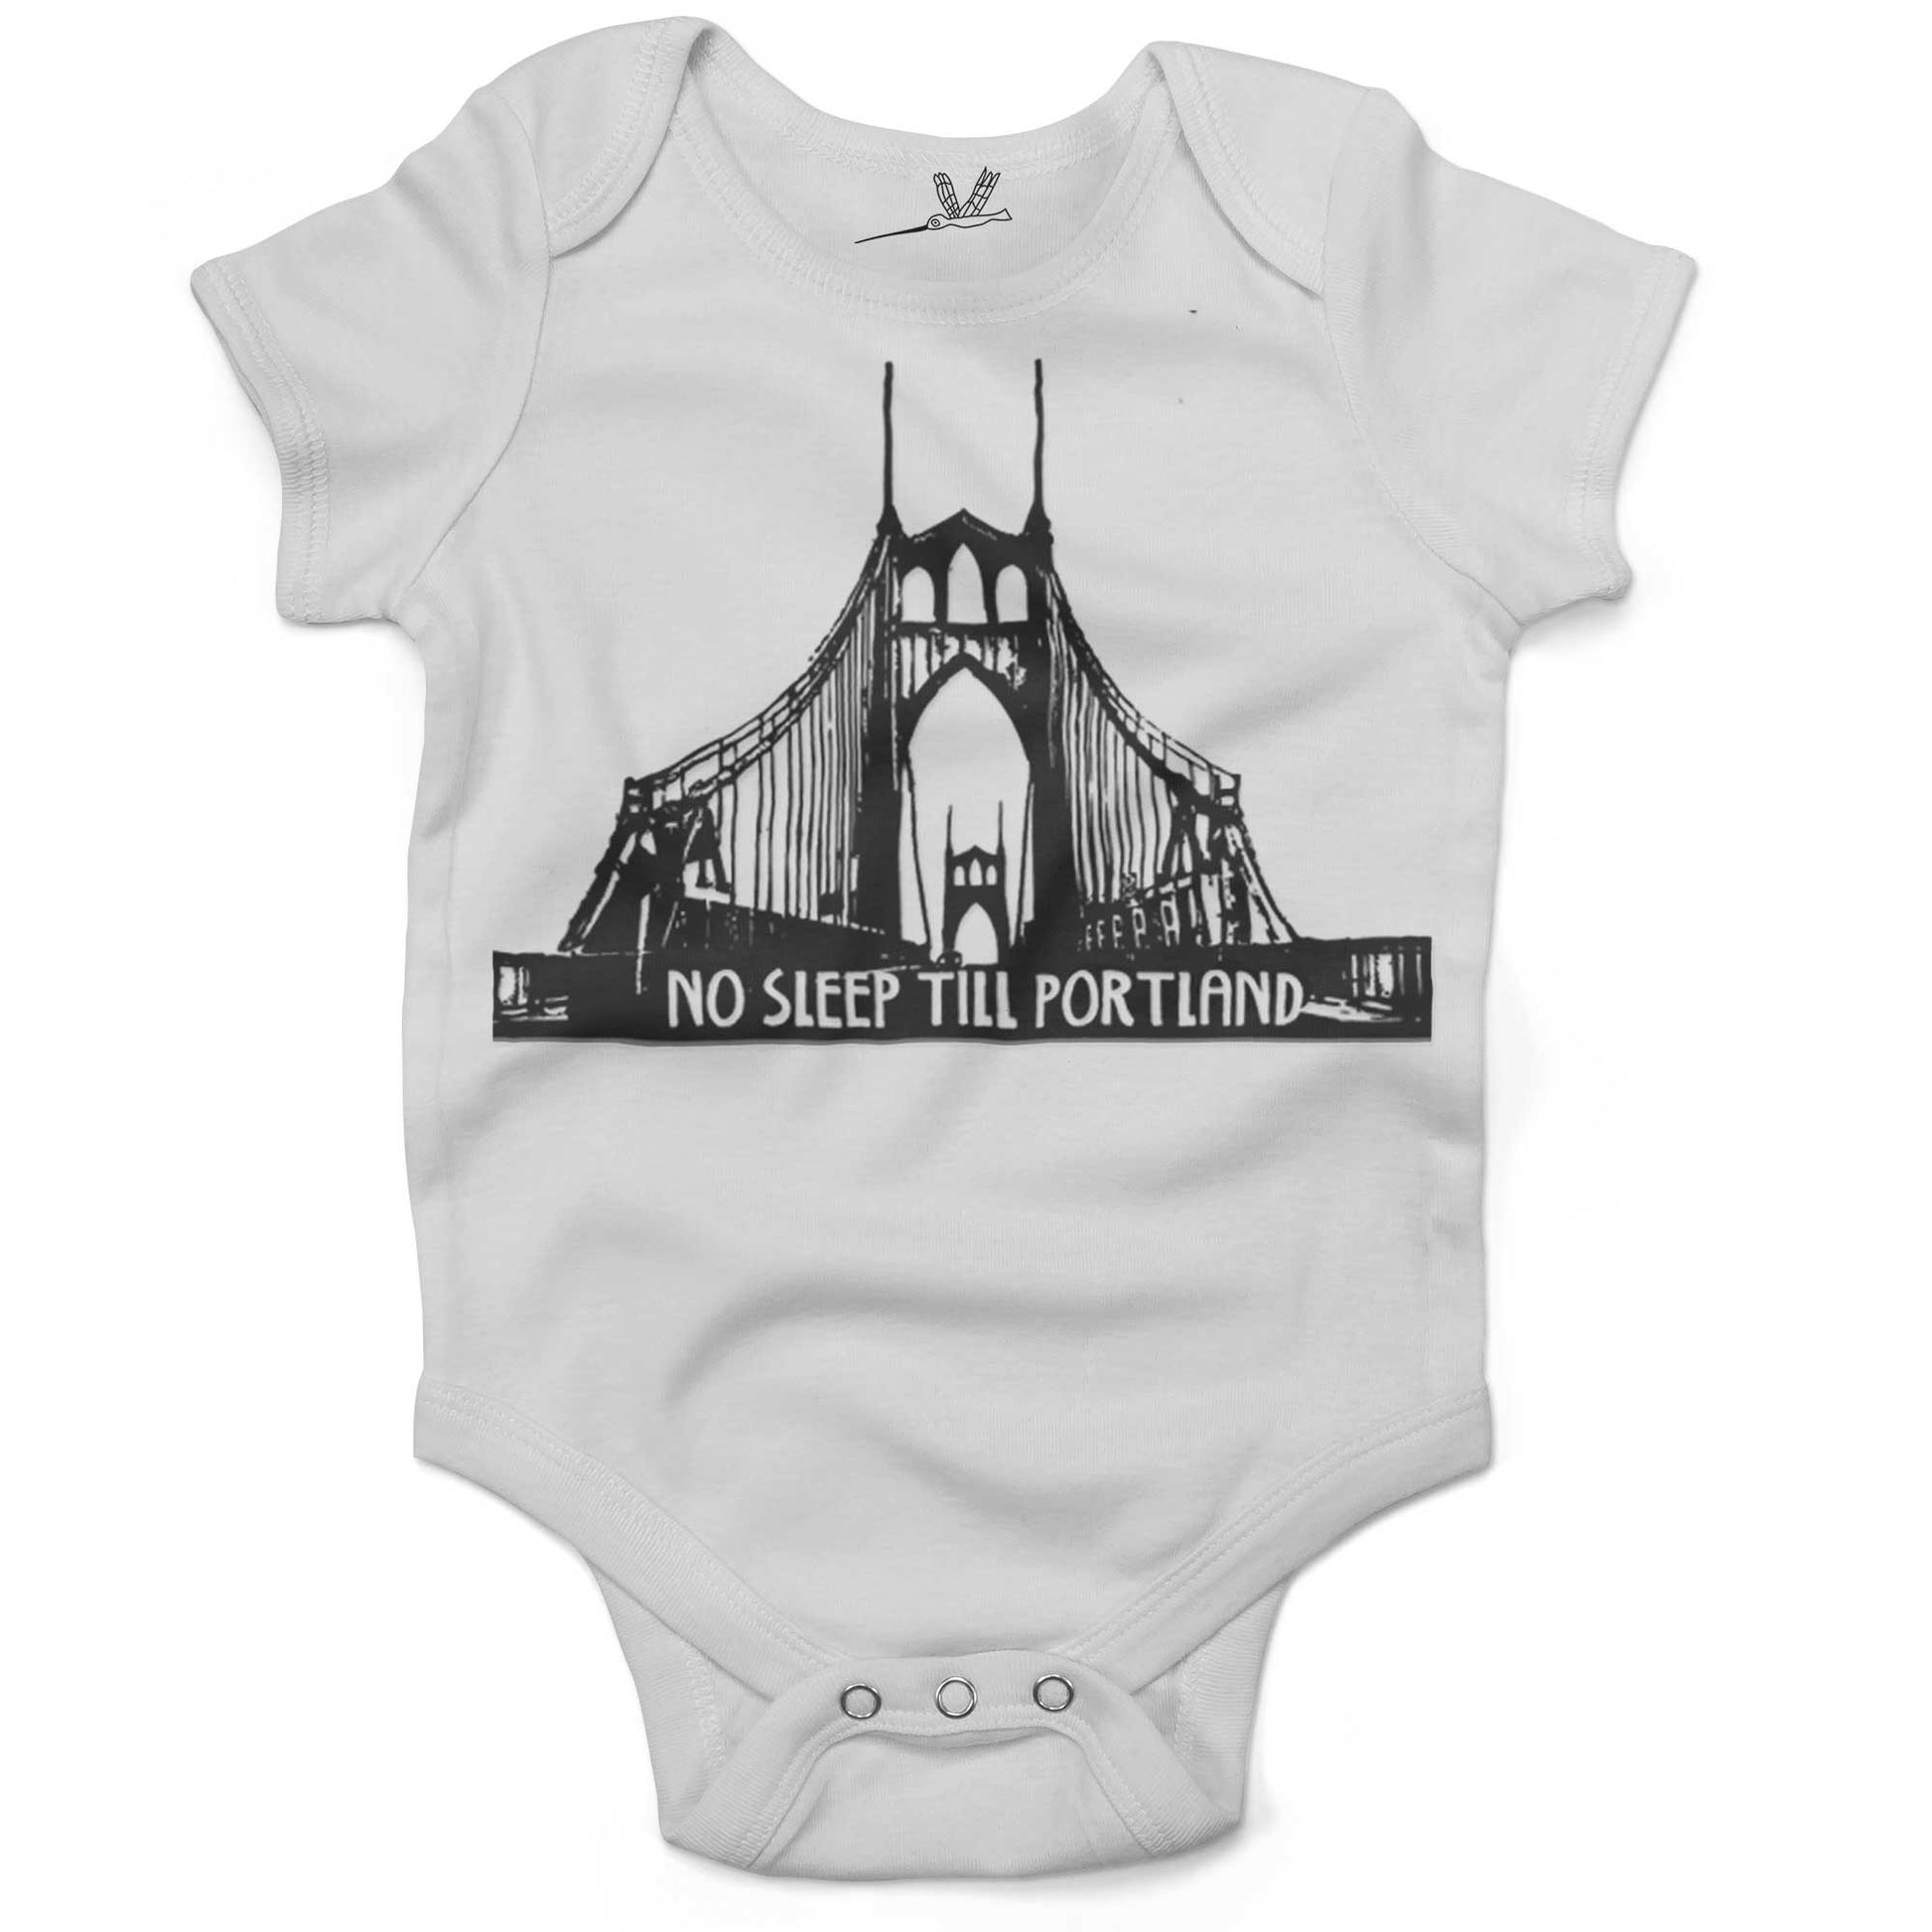 No Sleep Till Portland Infant Bodysuit or Raglan Baby Tee-White-3-6 months